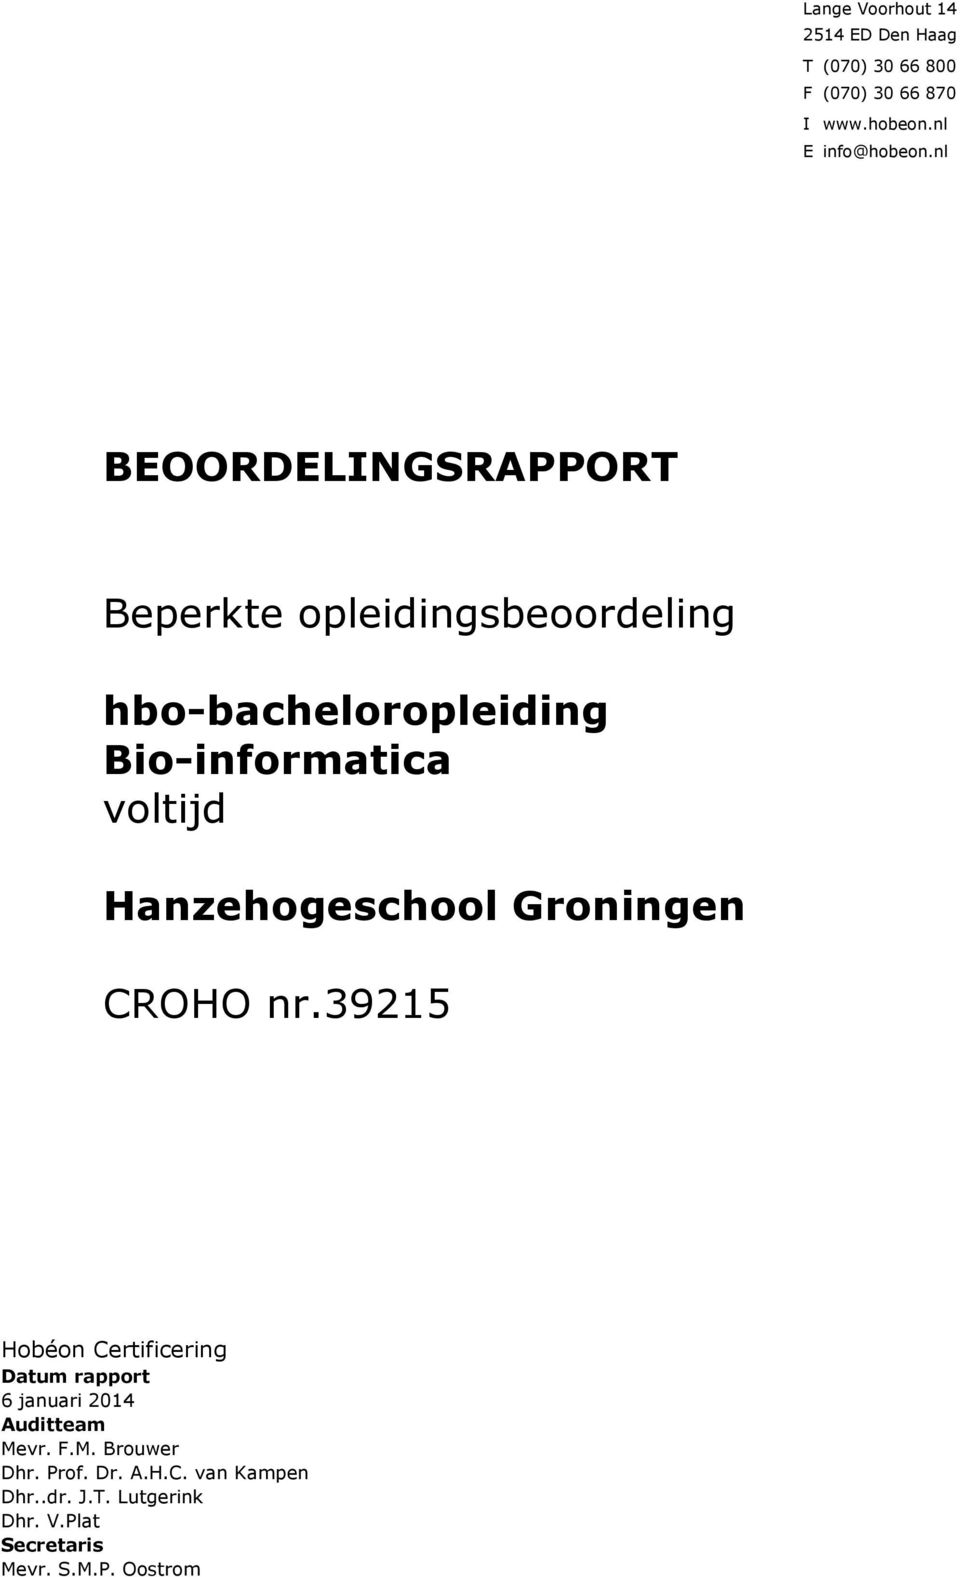 Hanzehogeschool Groningen CRH nr.